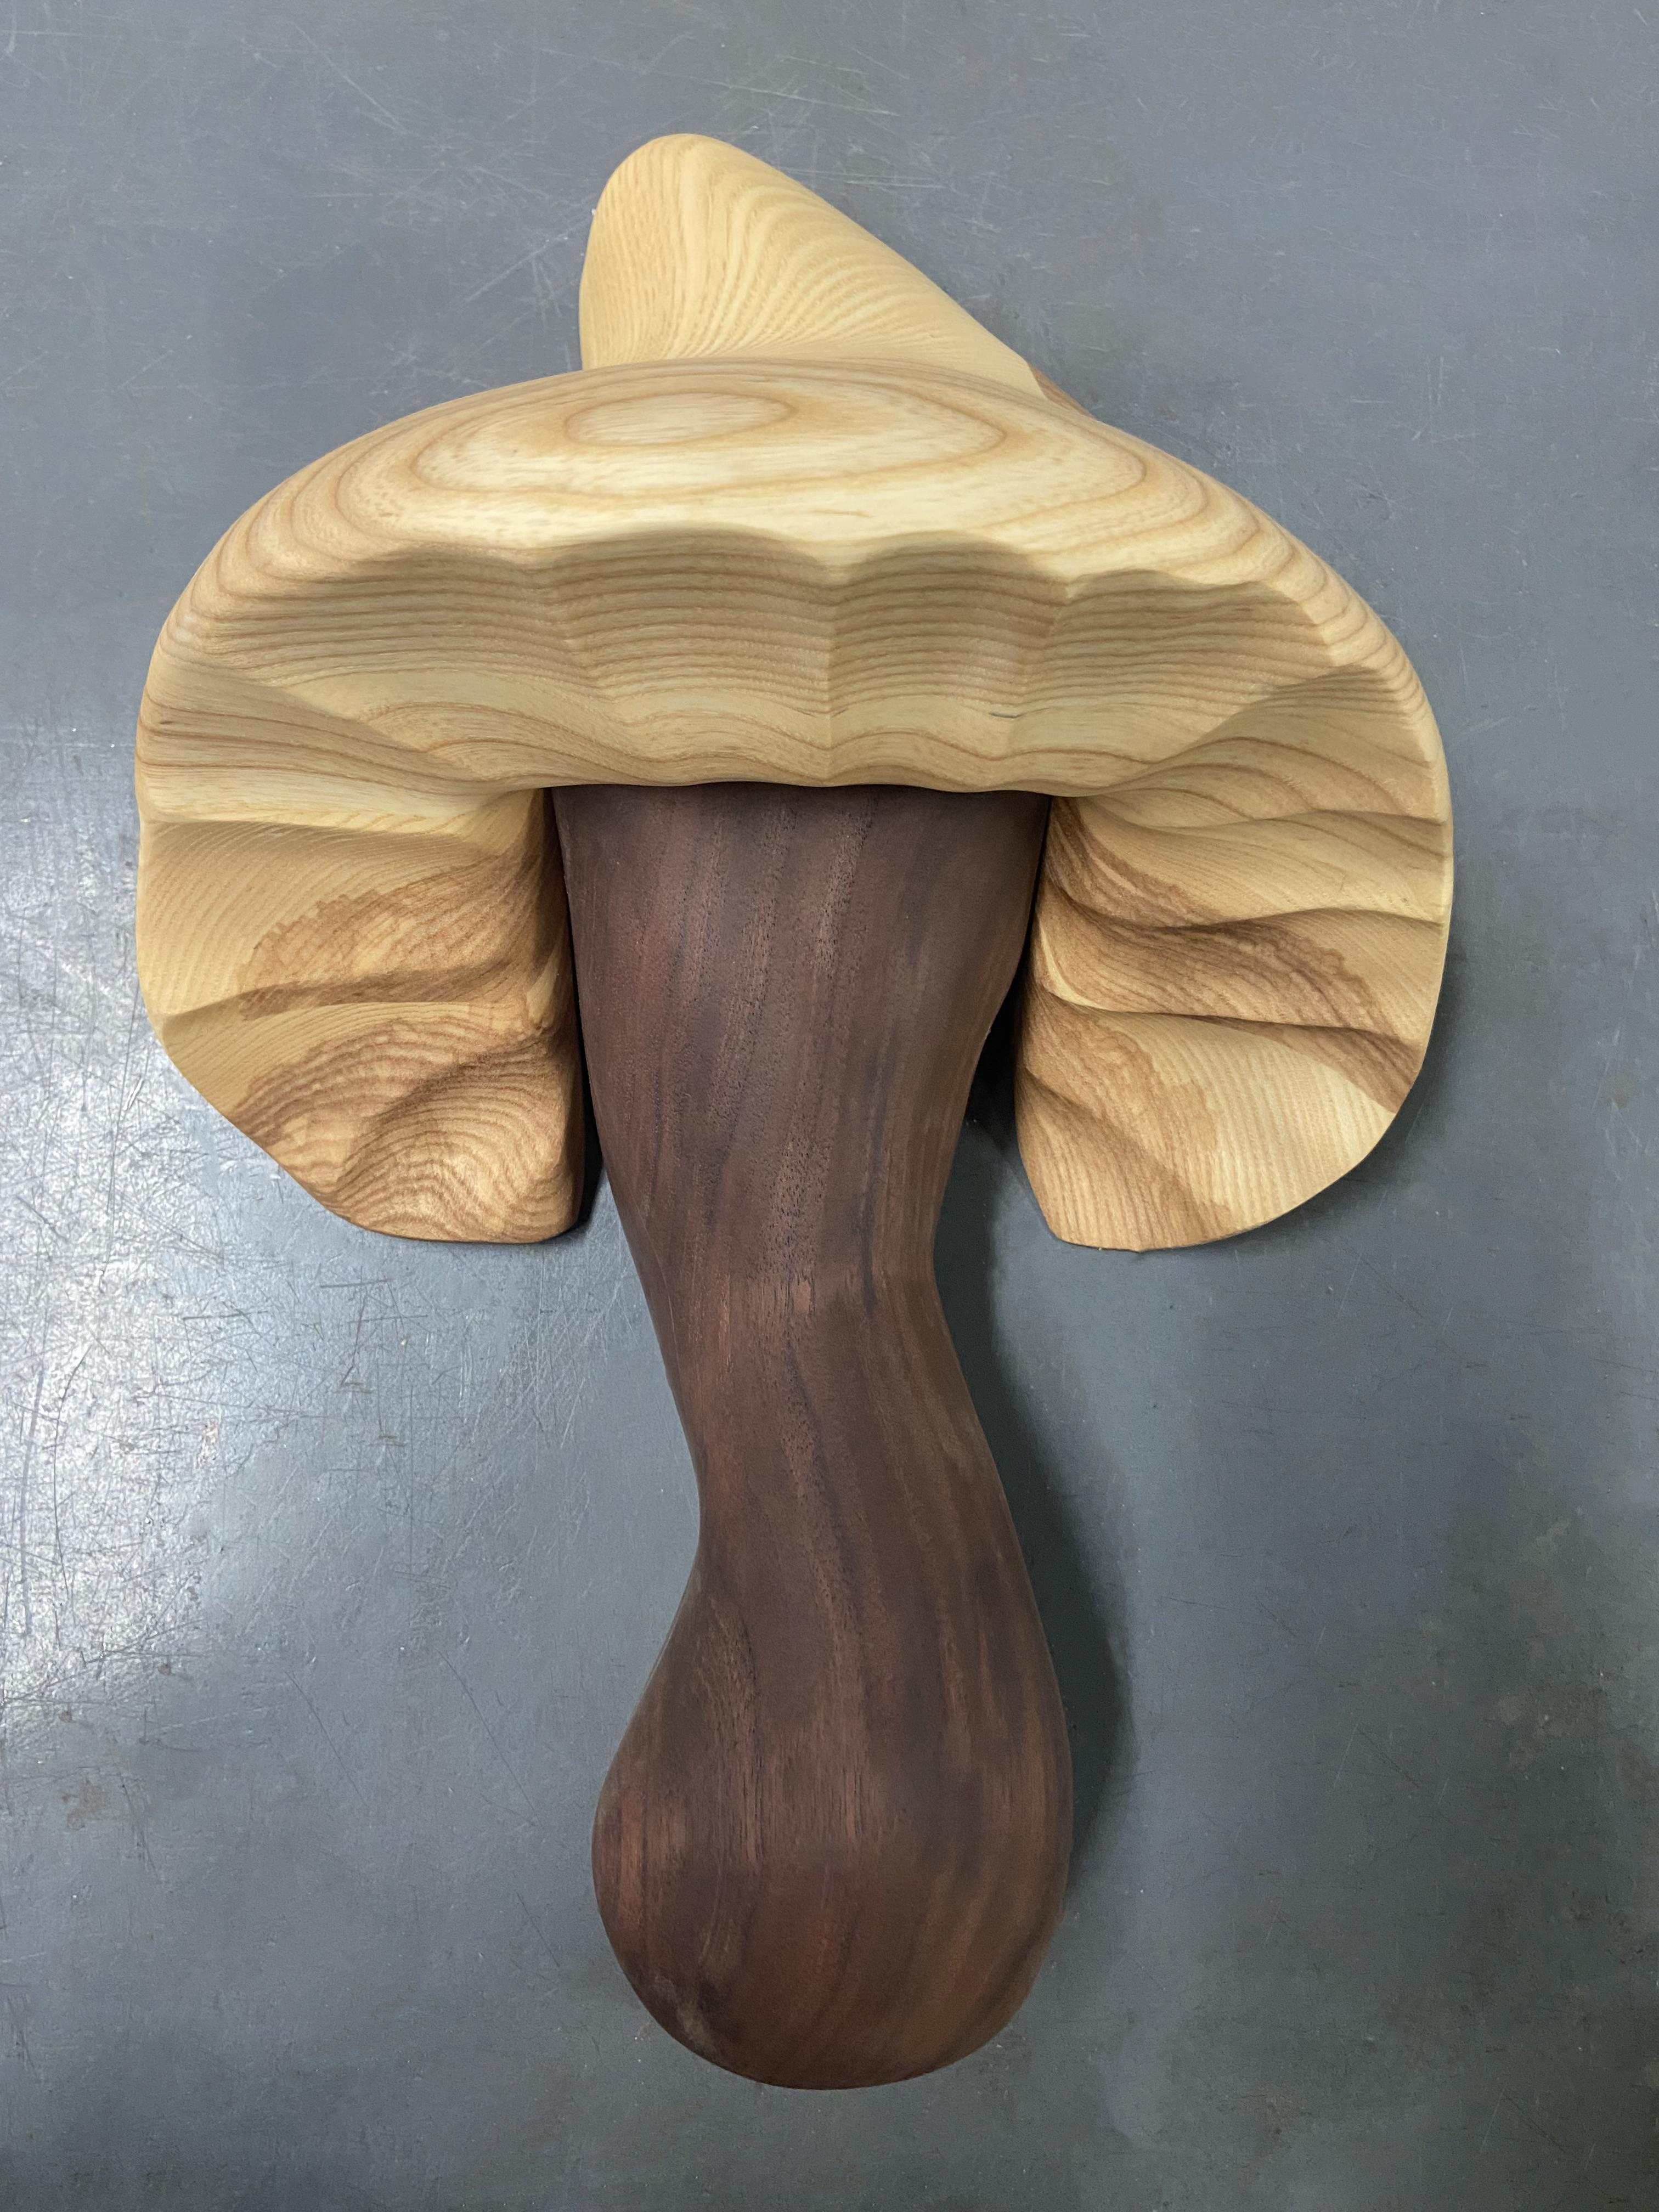 mushroom carving